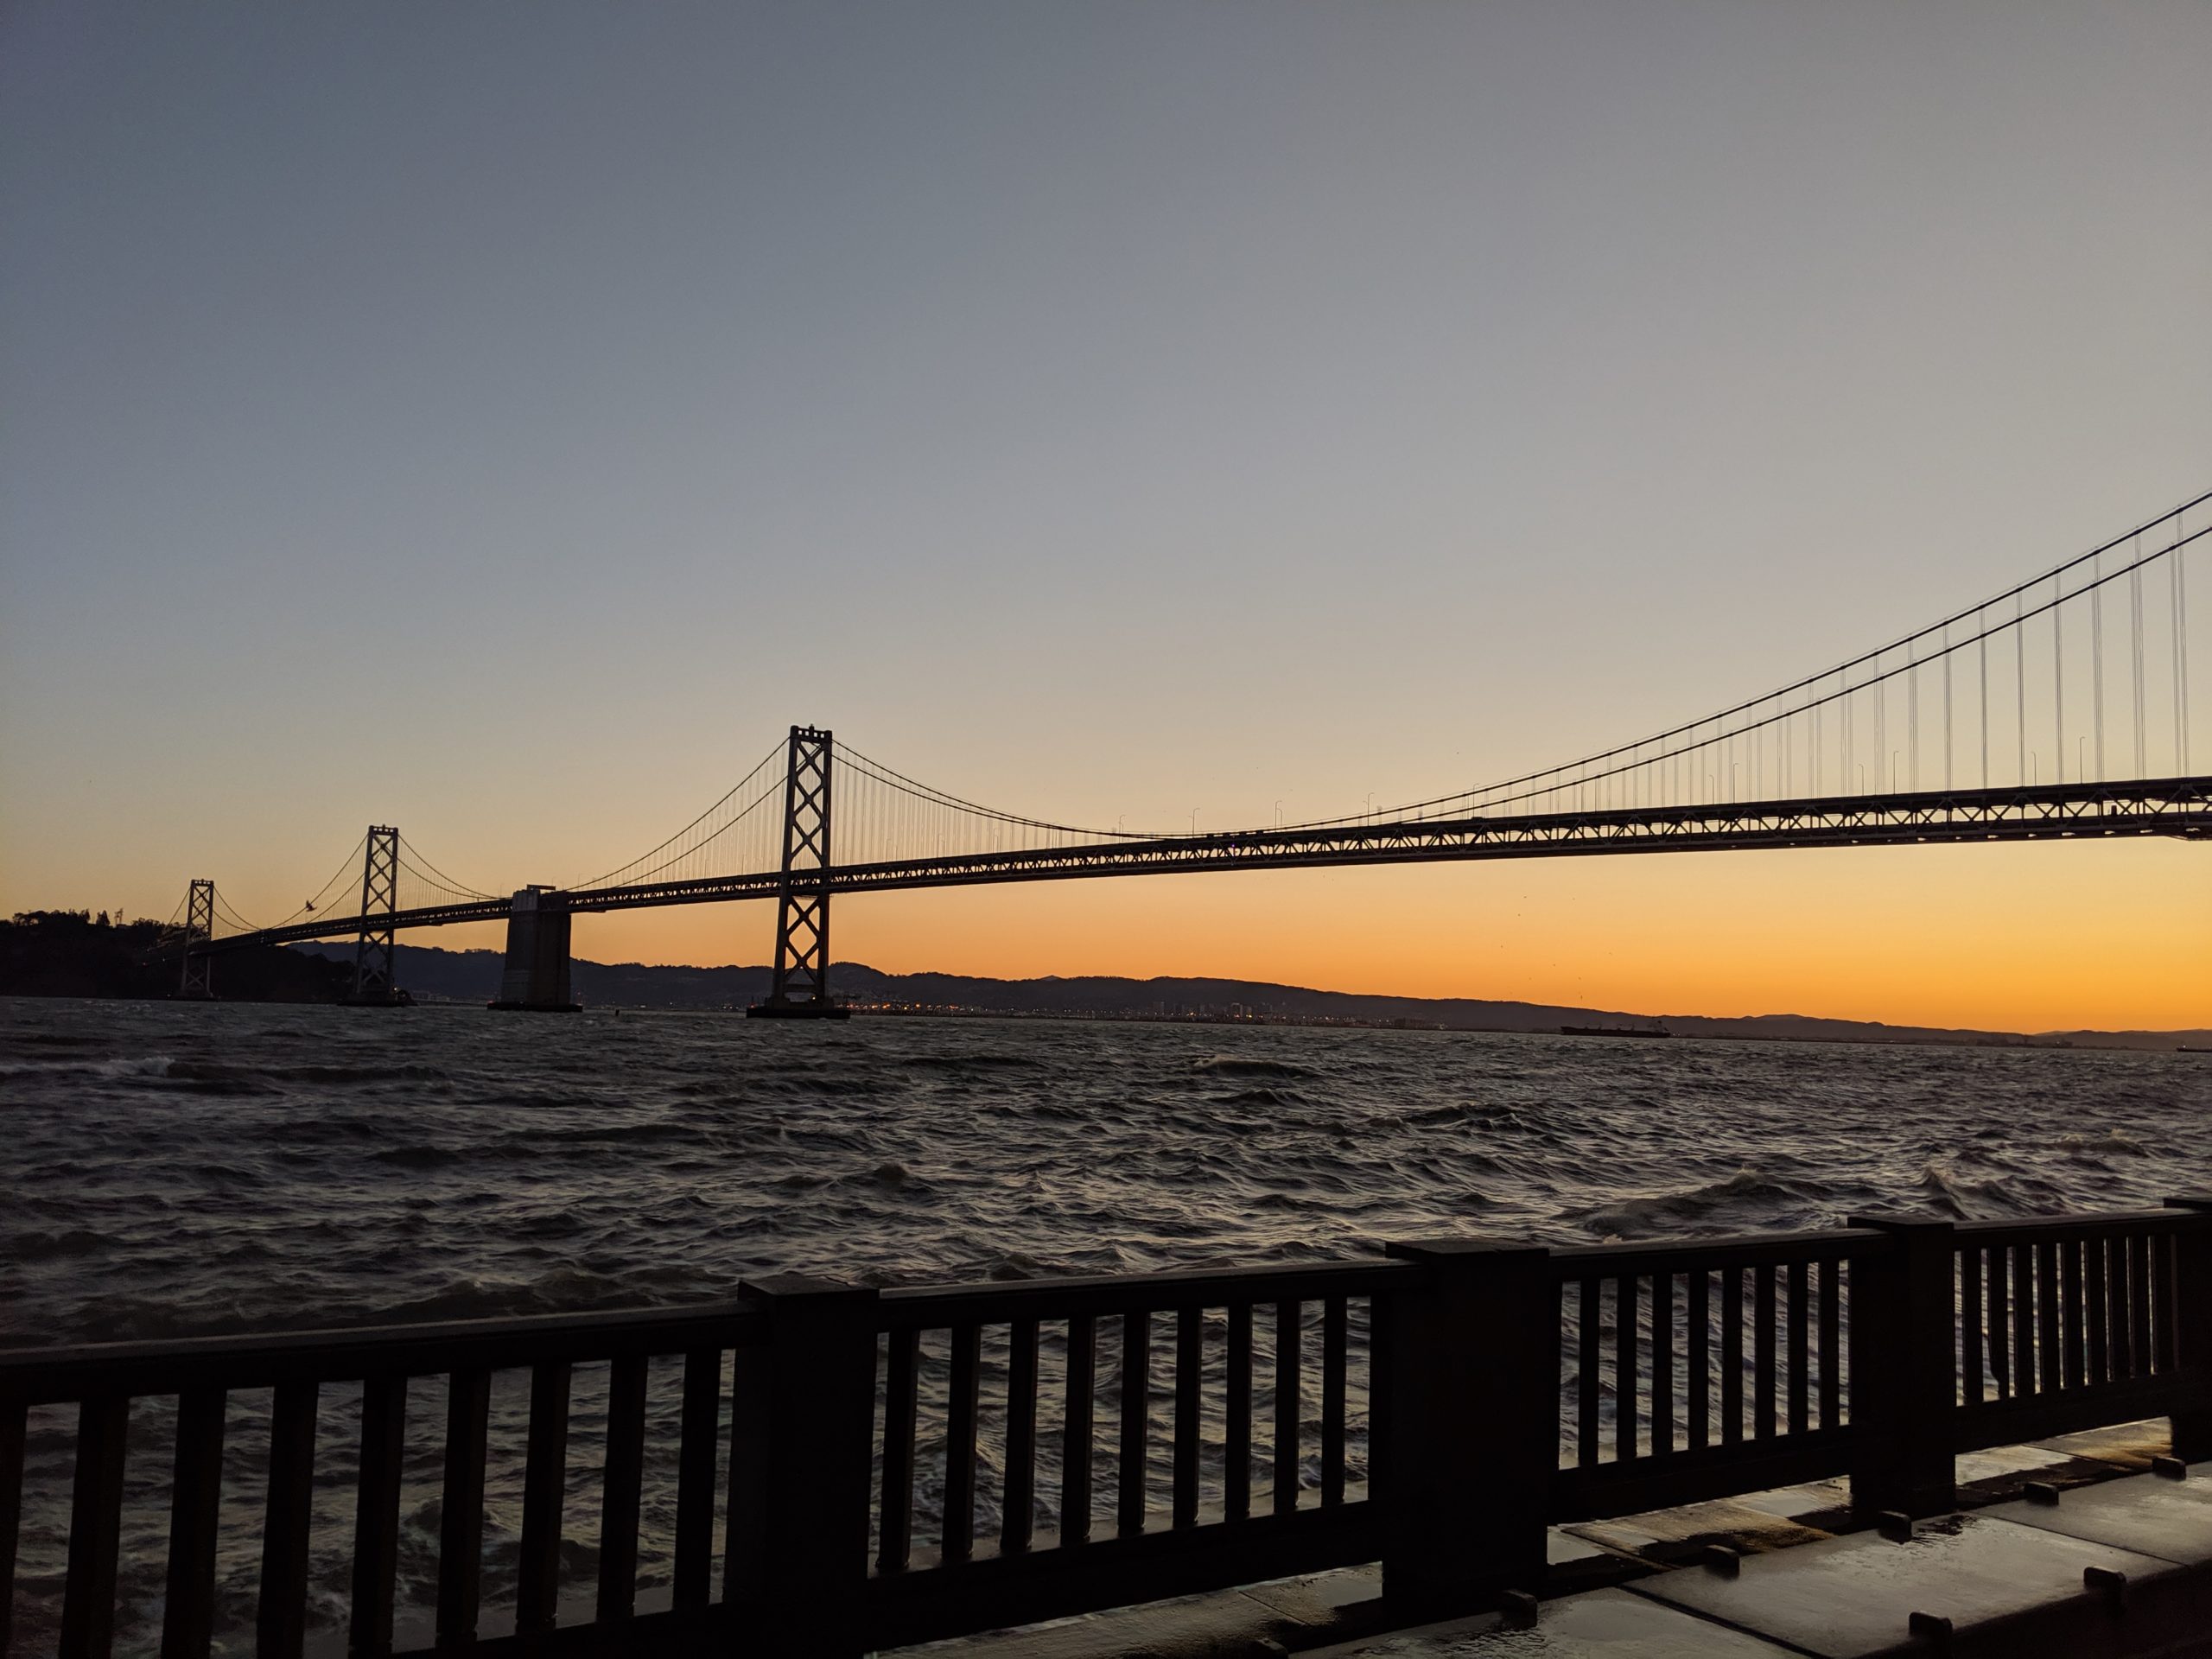 Sunrise behind the San Francisco Bay Bridge